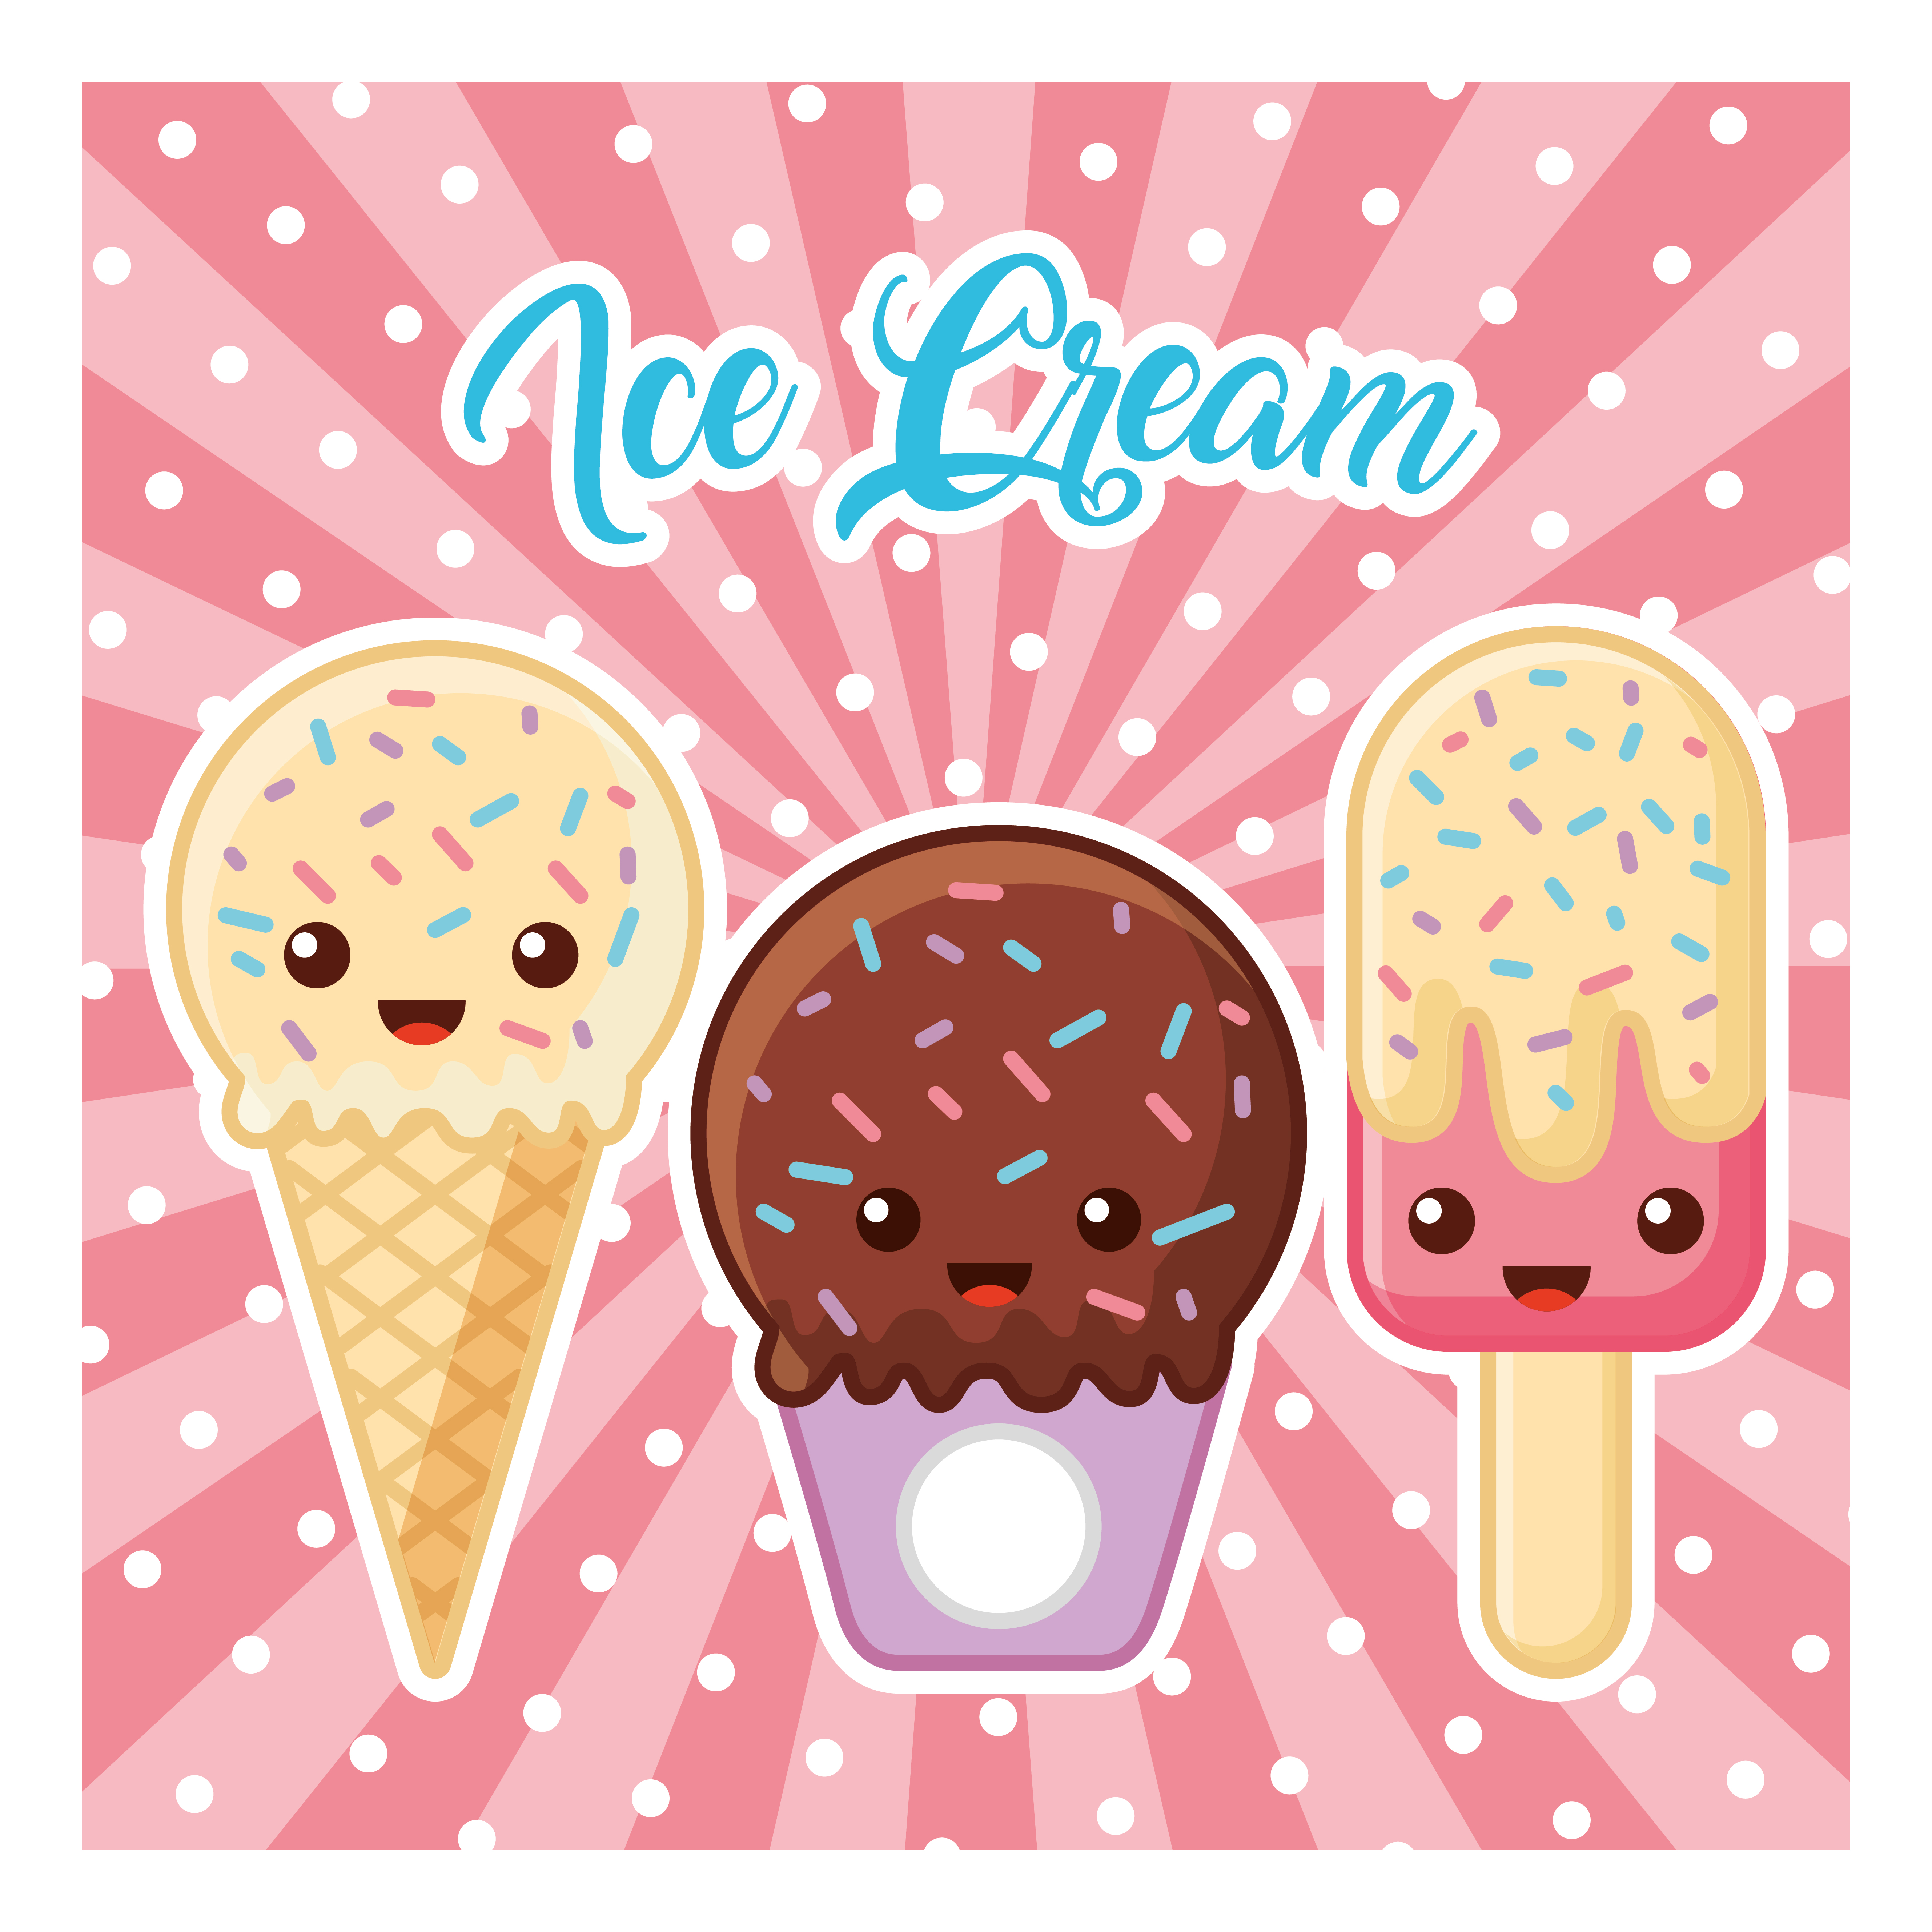 Cartoon ice cream cones with faces 679252 Vector Art at Vecteezy